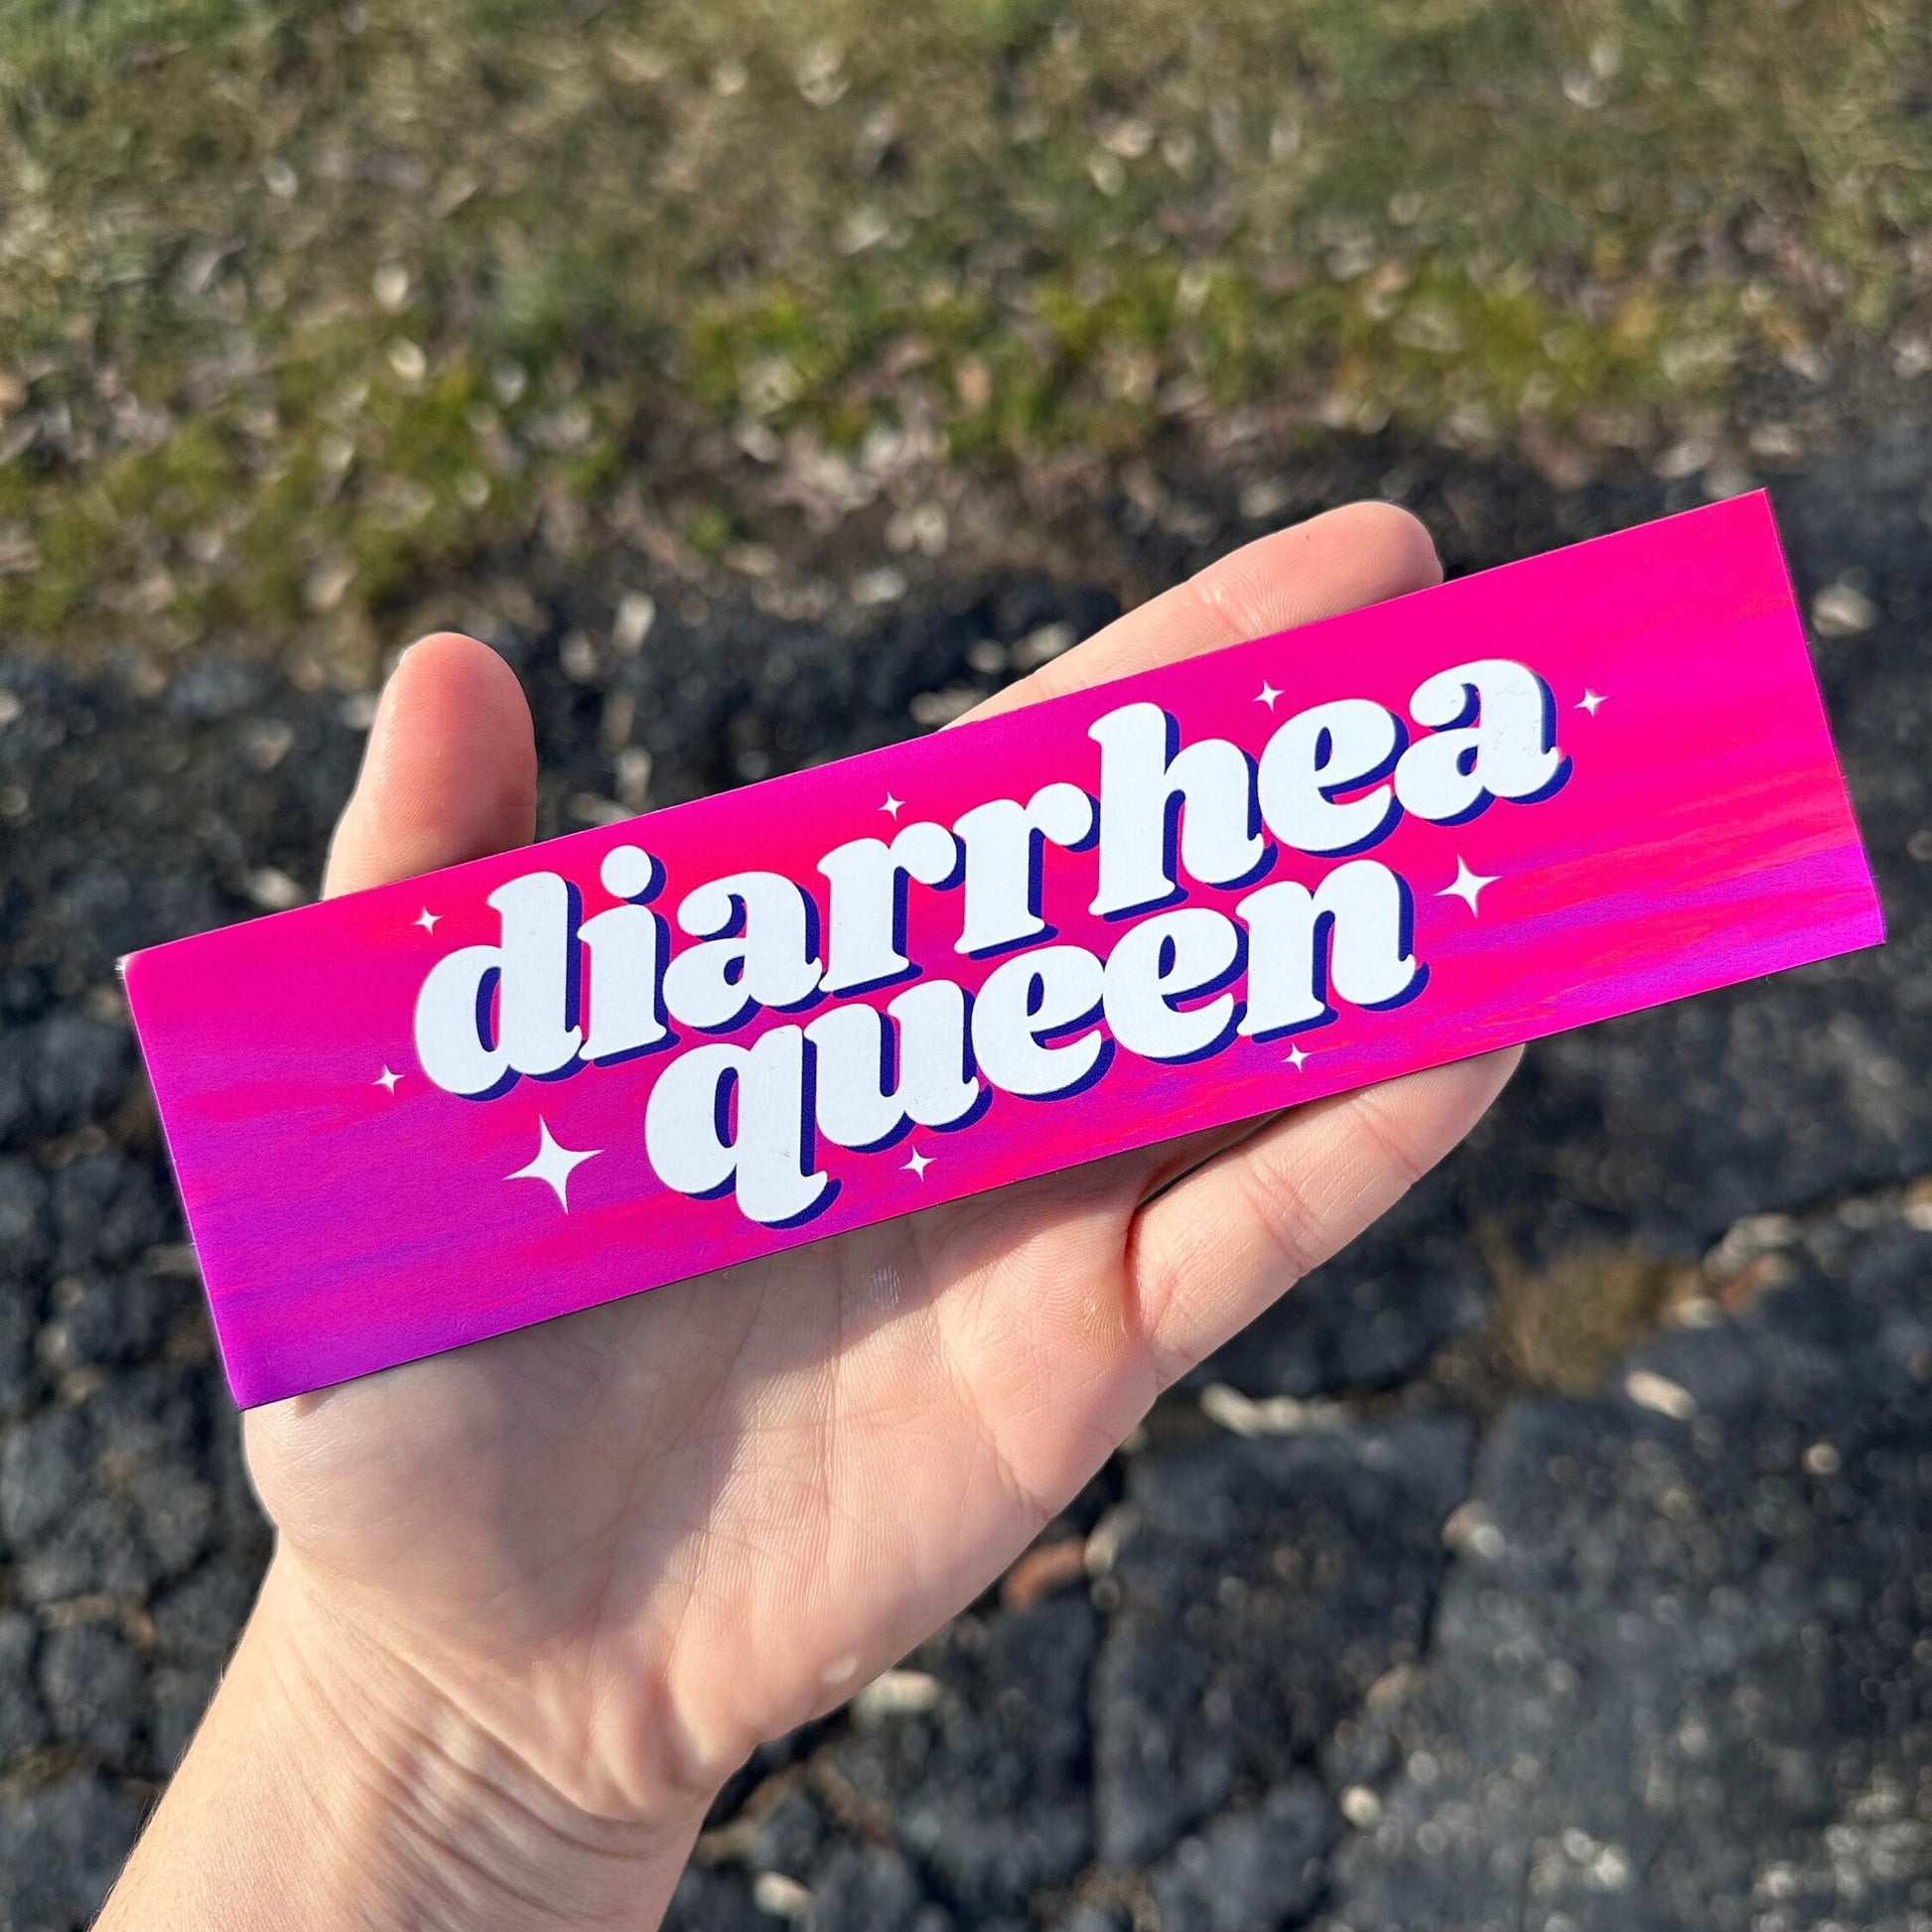 Diarrhea Queen Car Magnet